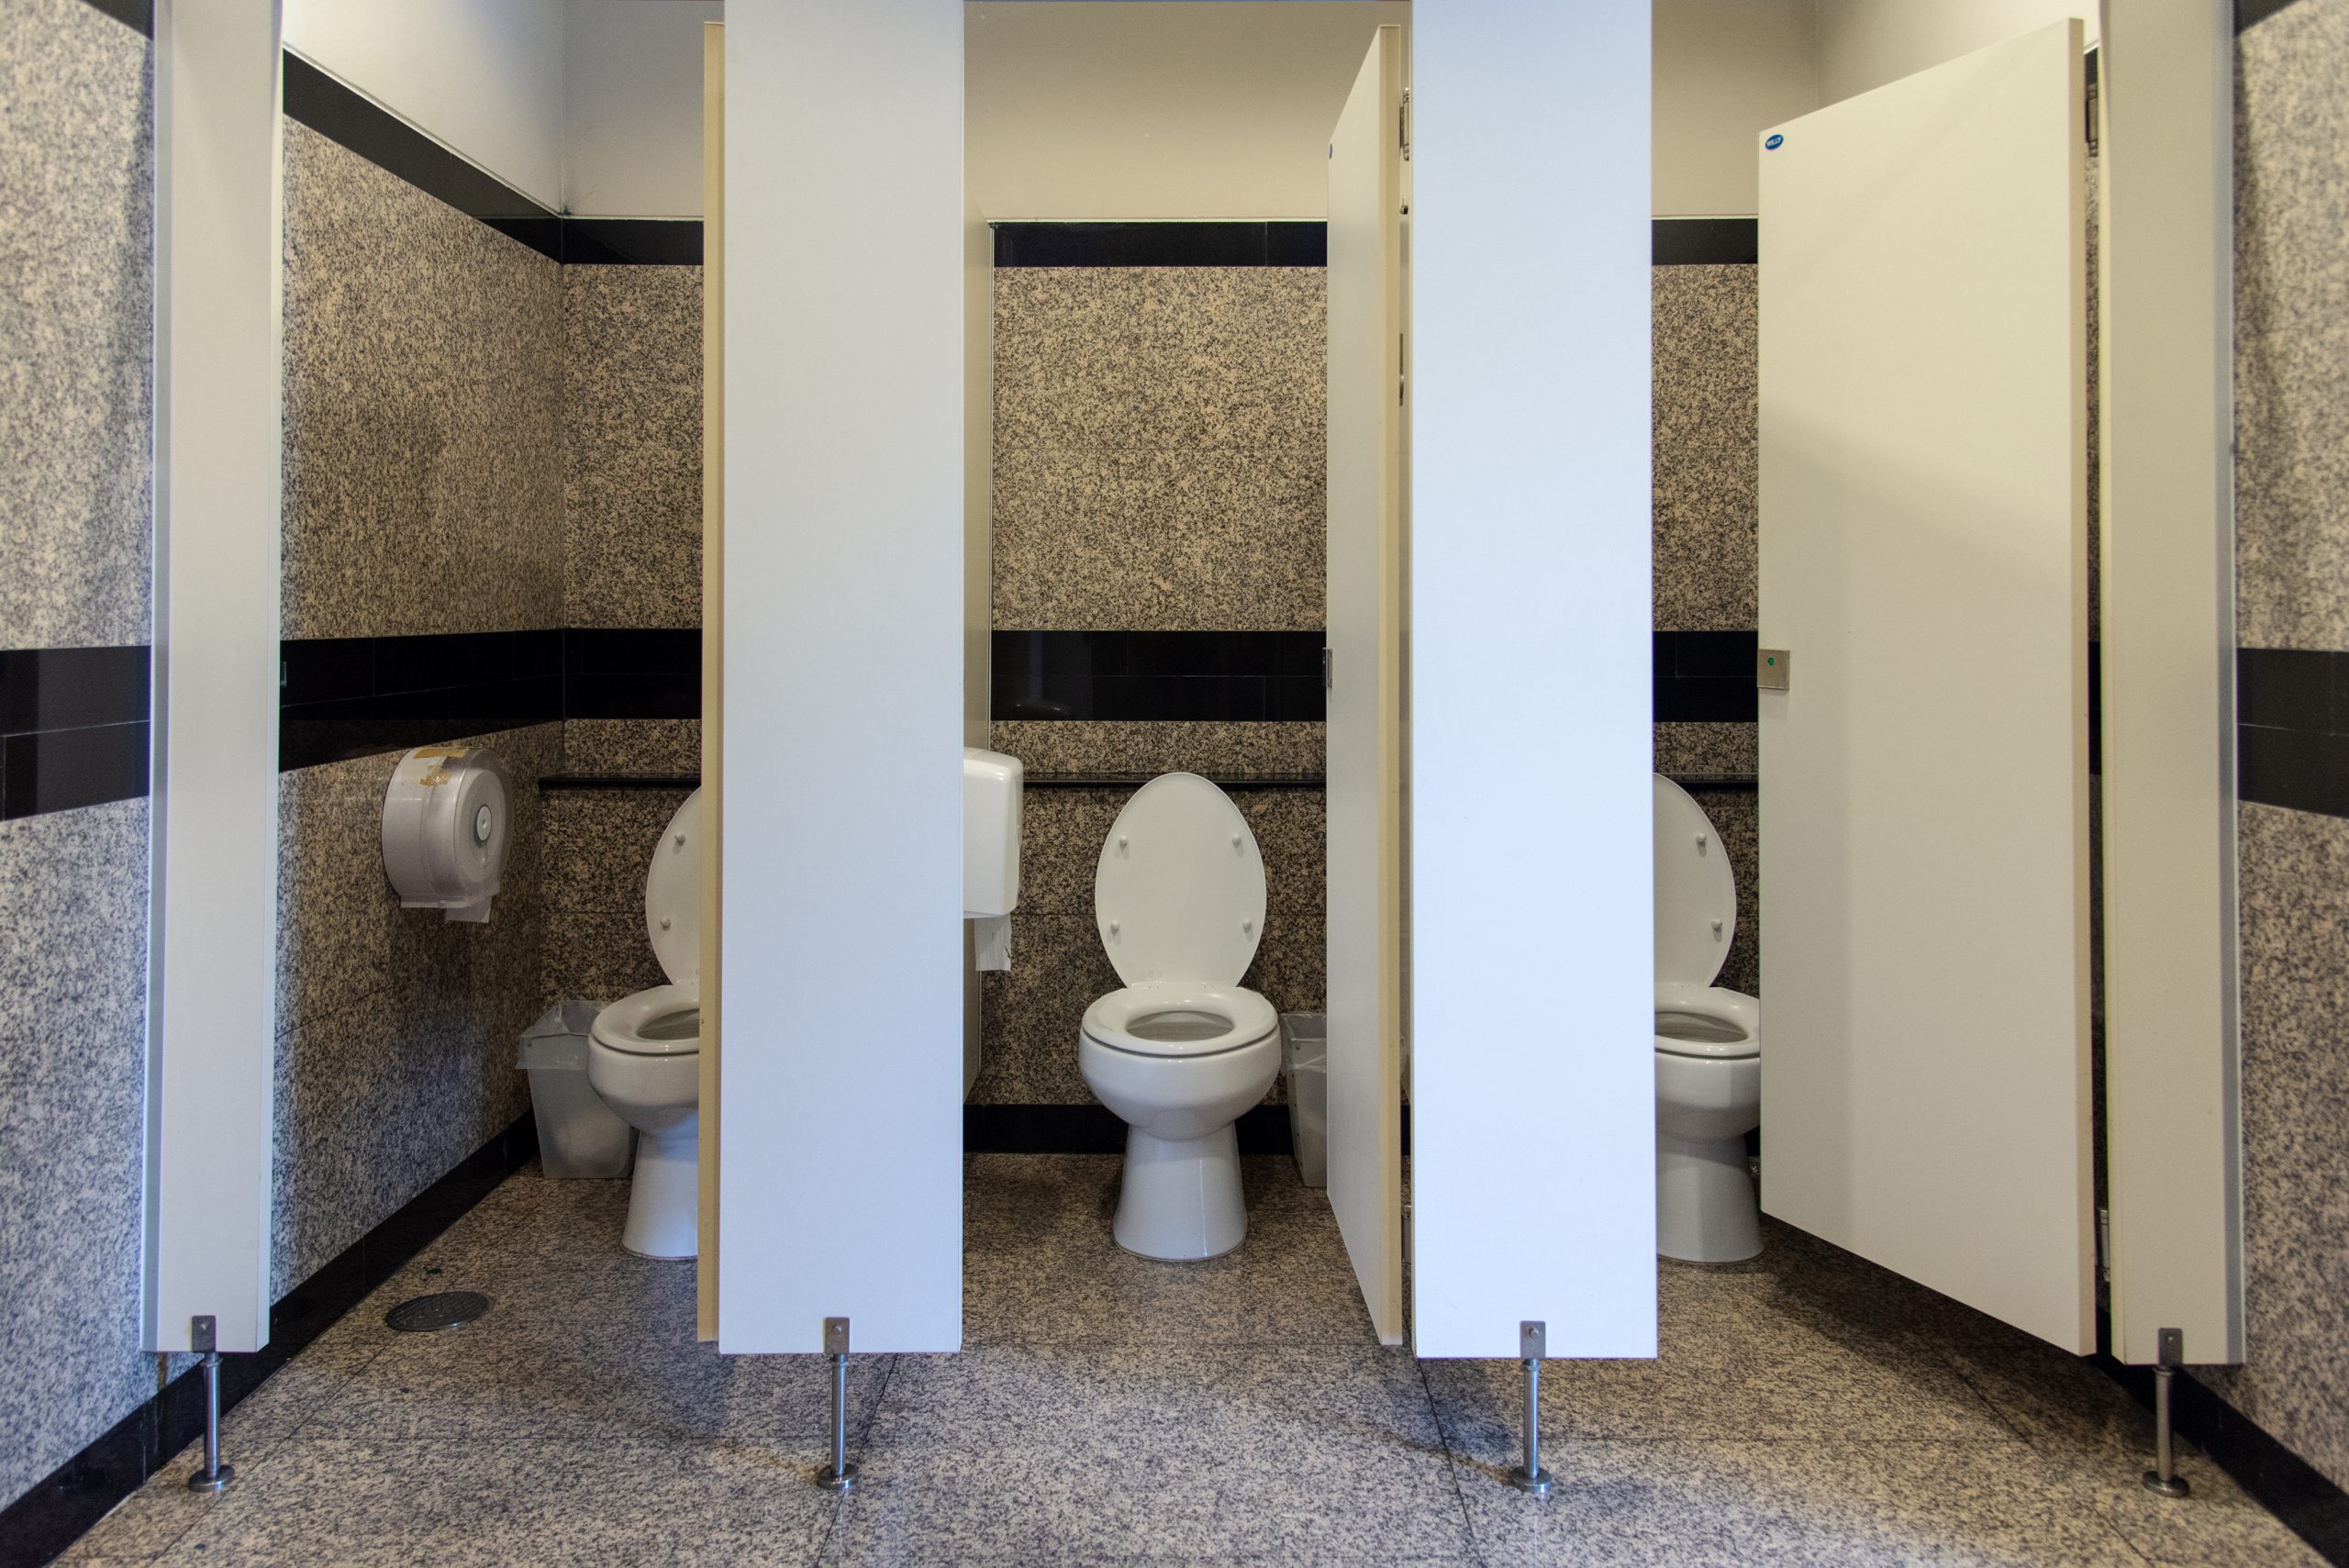 4 ways COVID-19 increases the public restroom germ factor